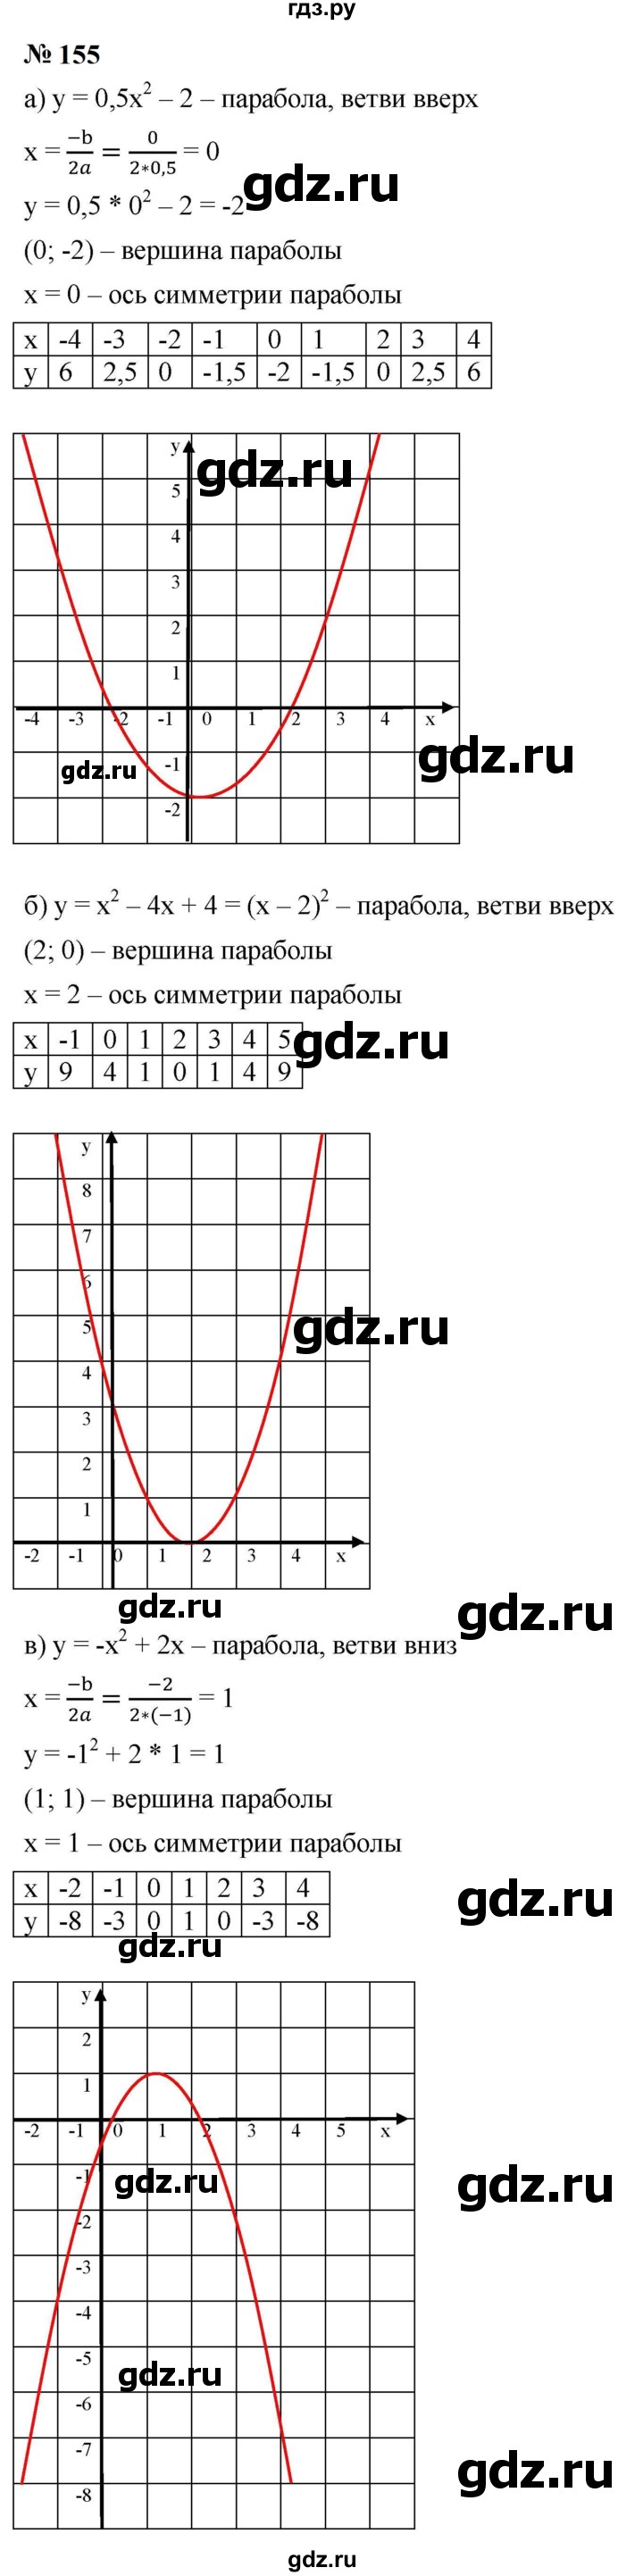 ГДЗ Задание 155 Алгебра 9 Класс Макарычев, Миндюк